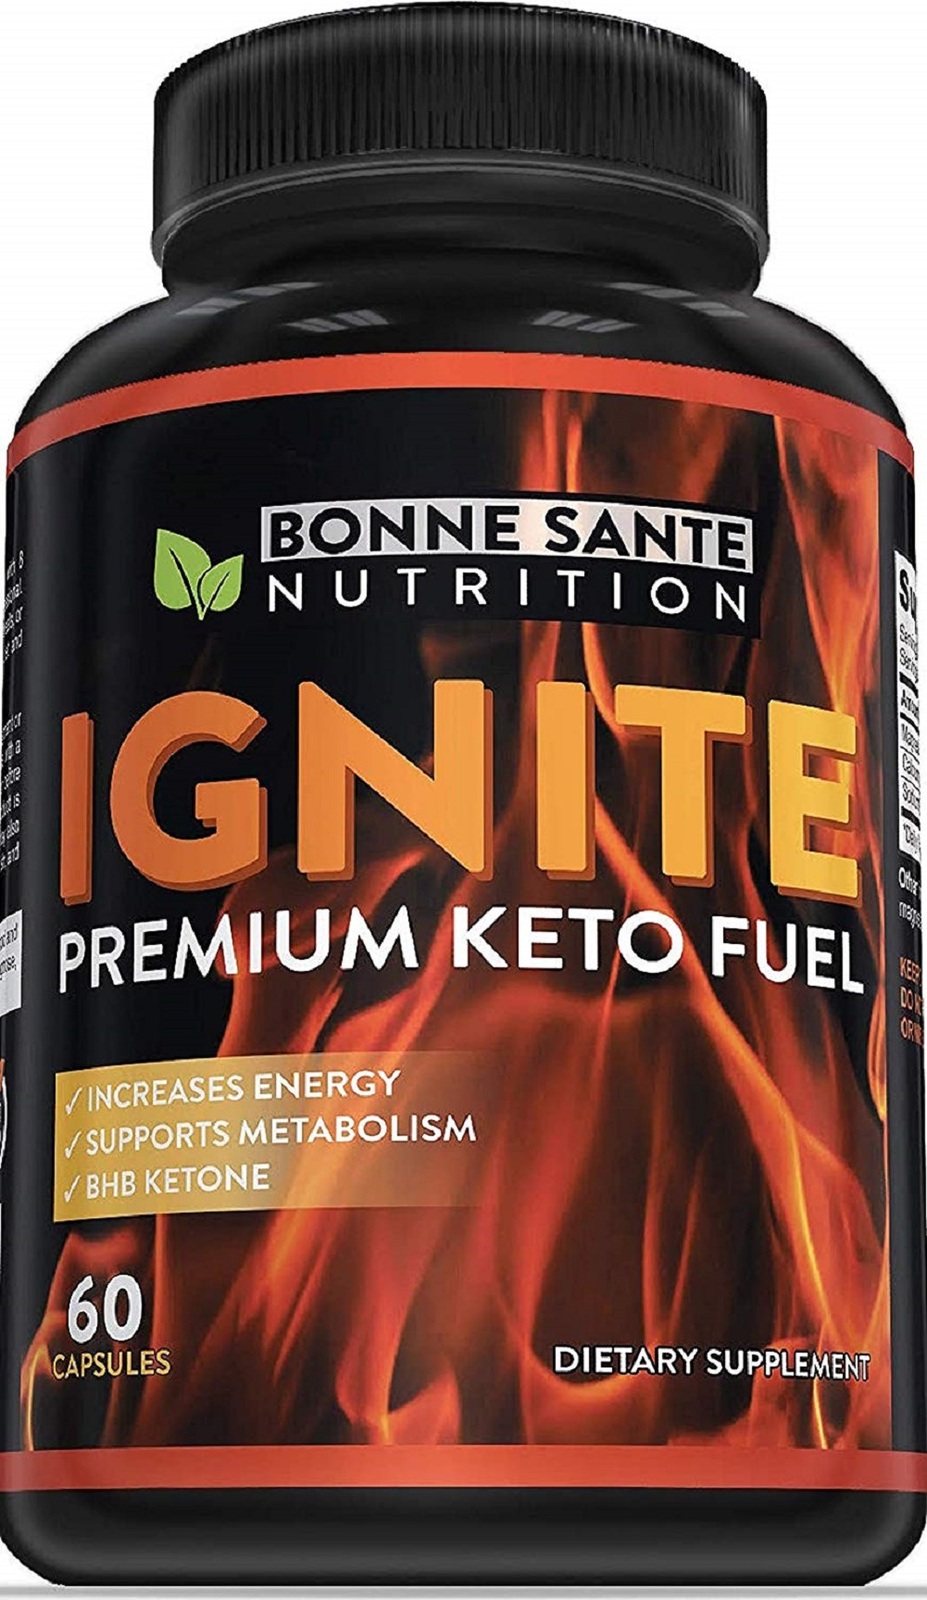 Bonne Sante Nutrition Ignite - Premium Keto Fuel Weight Loss BHB Salts - 60 Caps